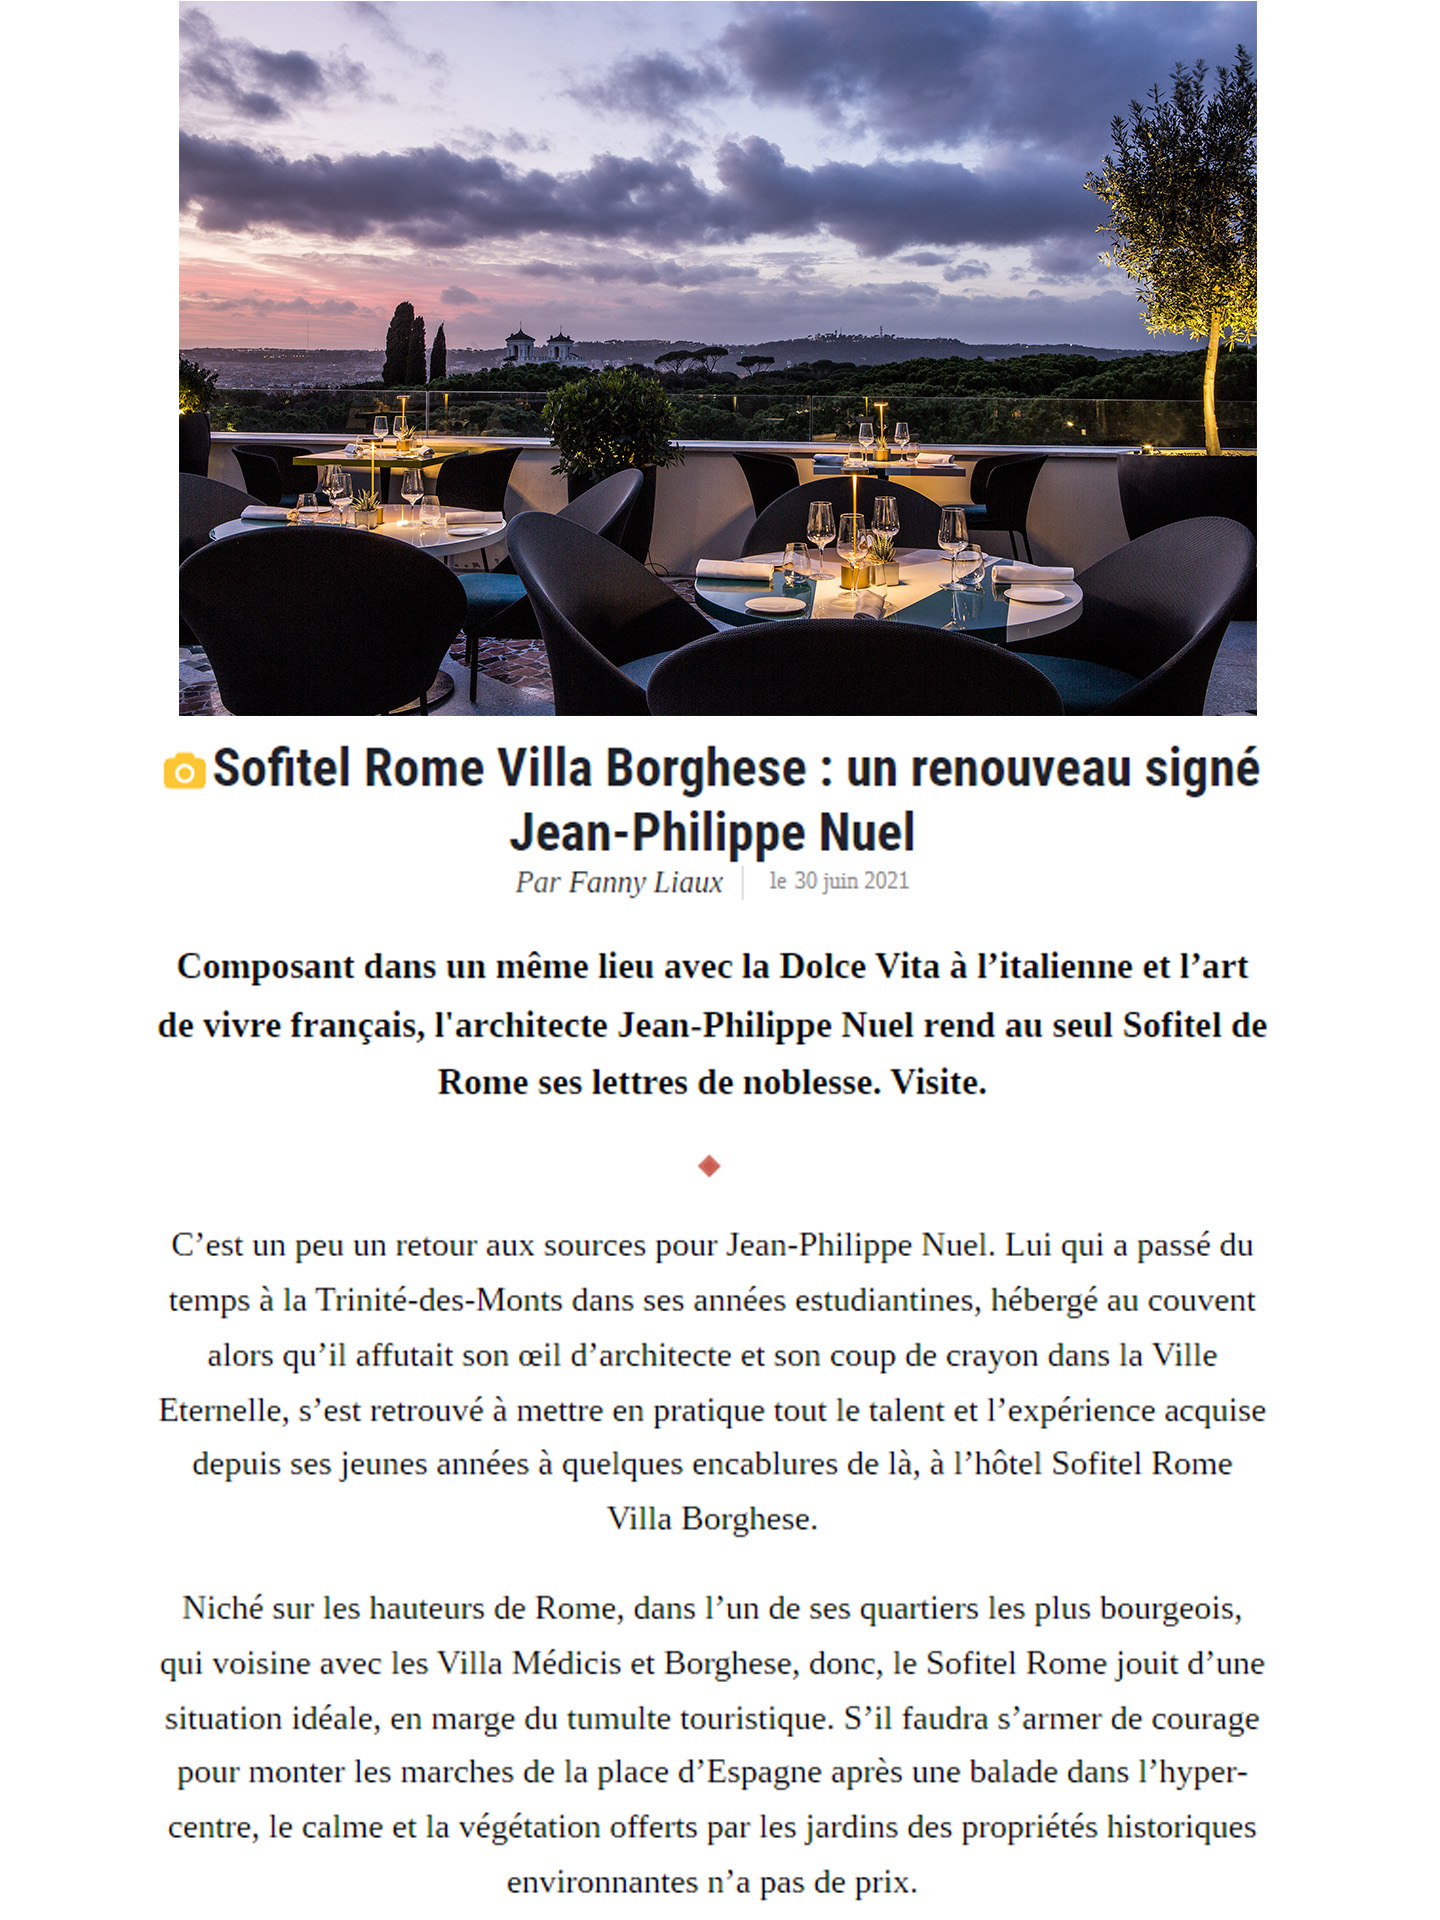 Article in the good life magazine about the sofitel rome villa borghese, luxury hotel, interior design by the studio Jean-Philippe Nuel, interior design, accor group